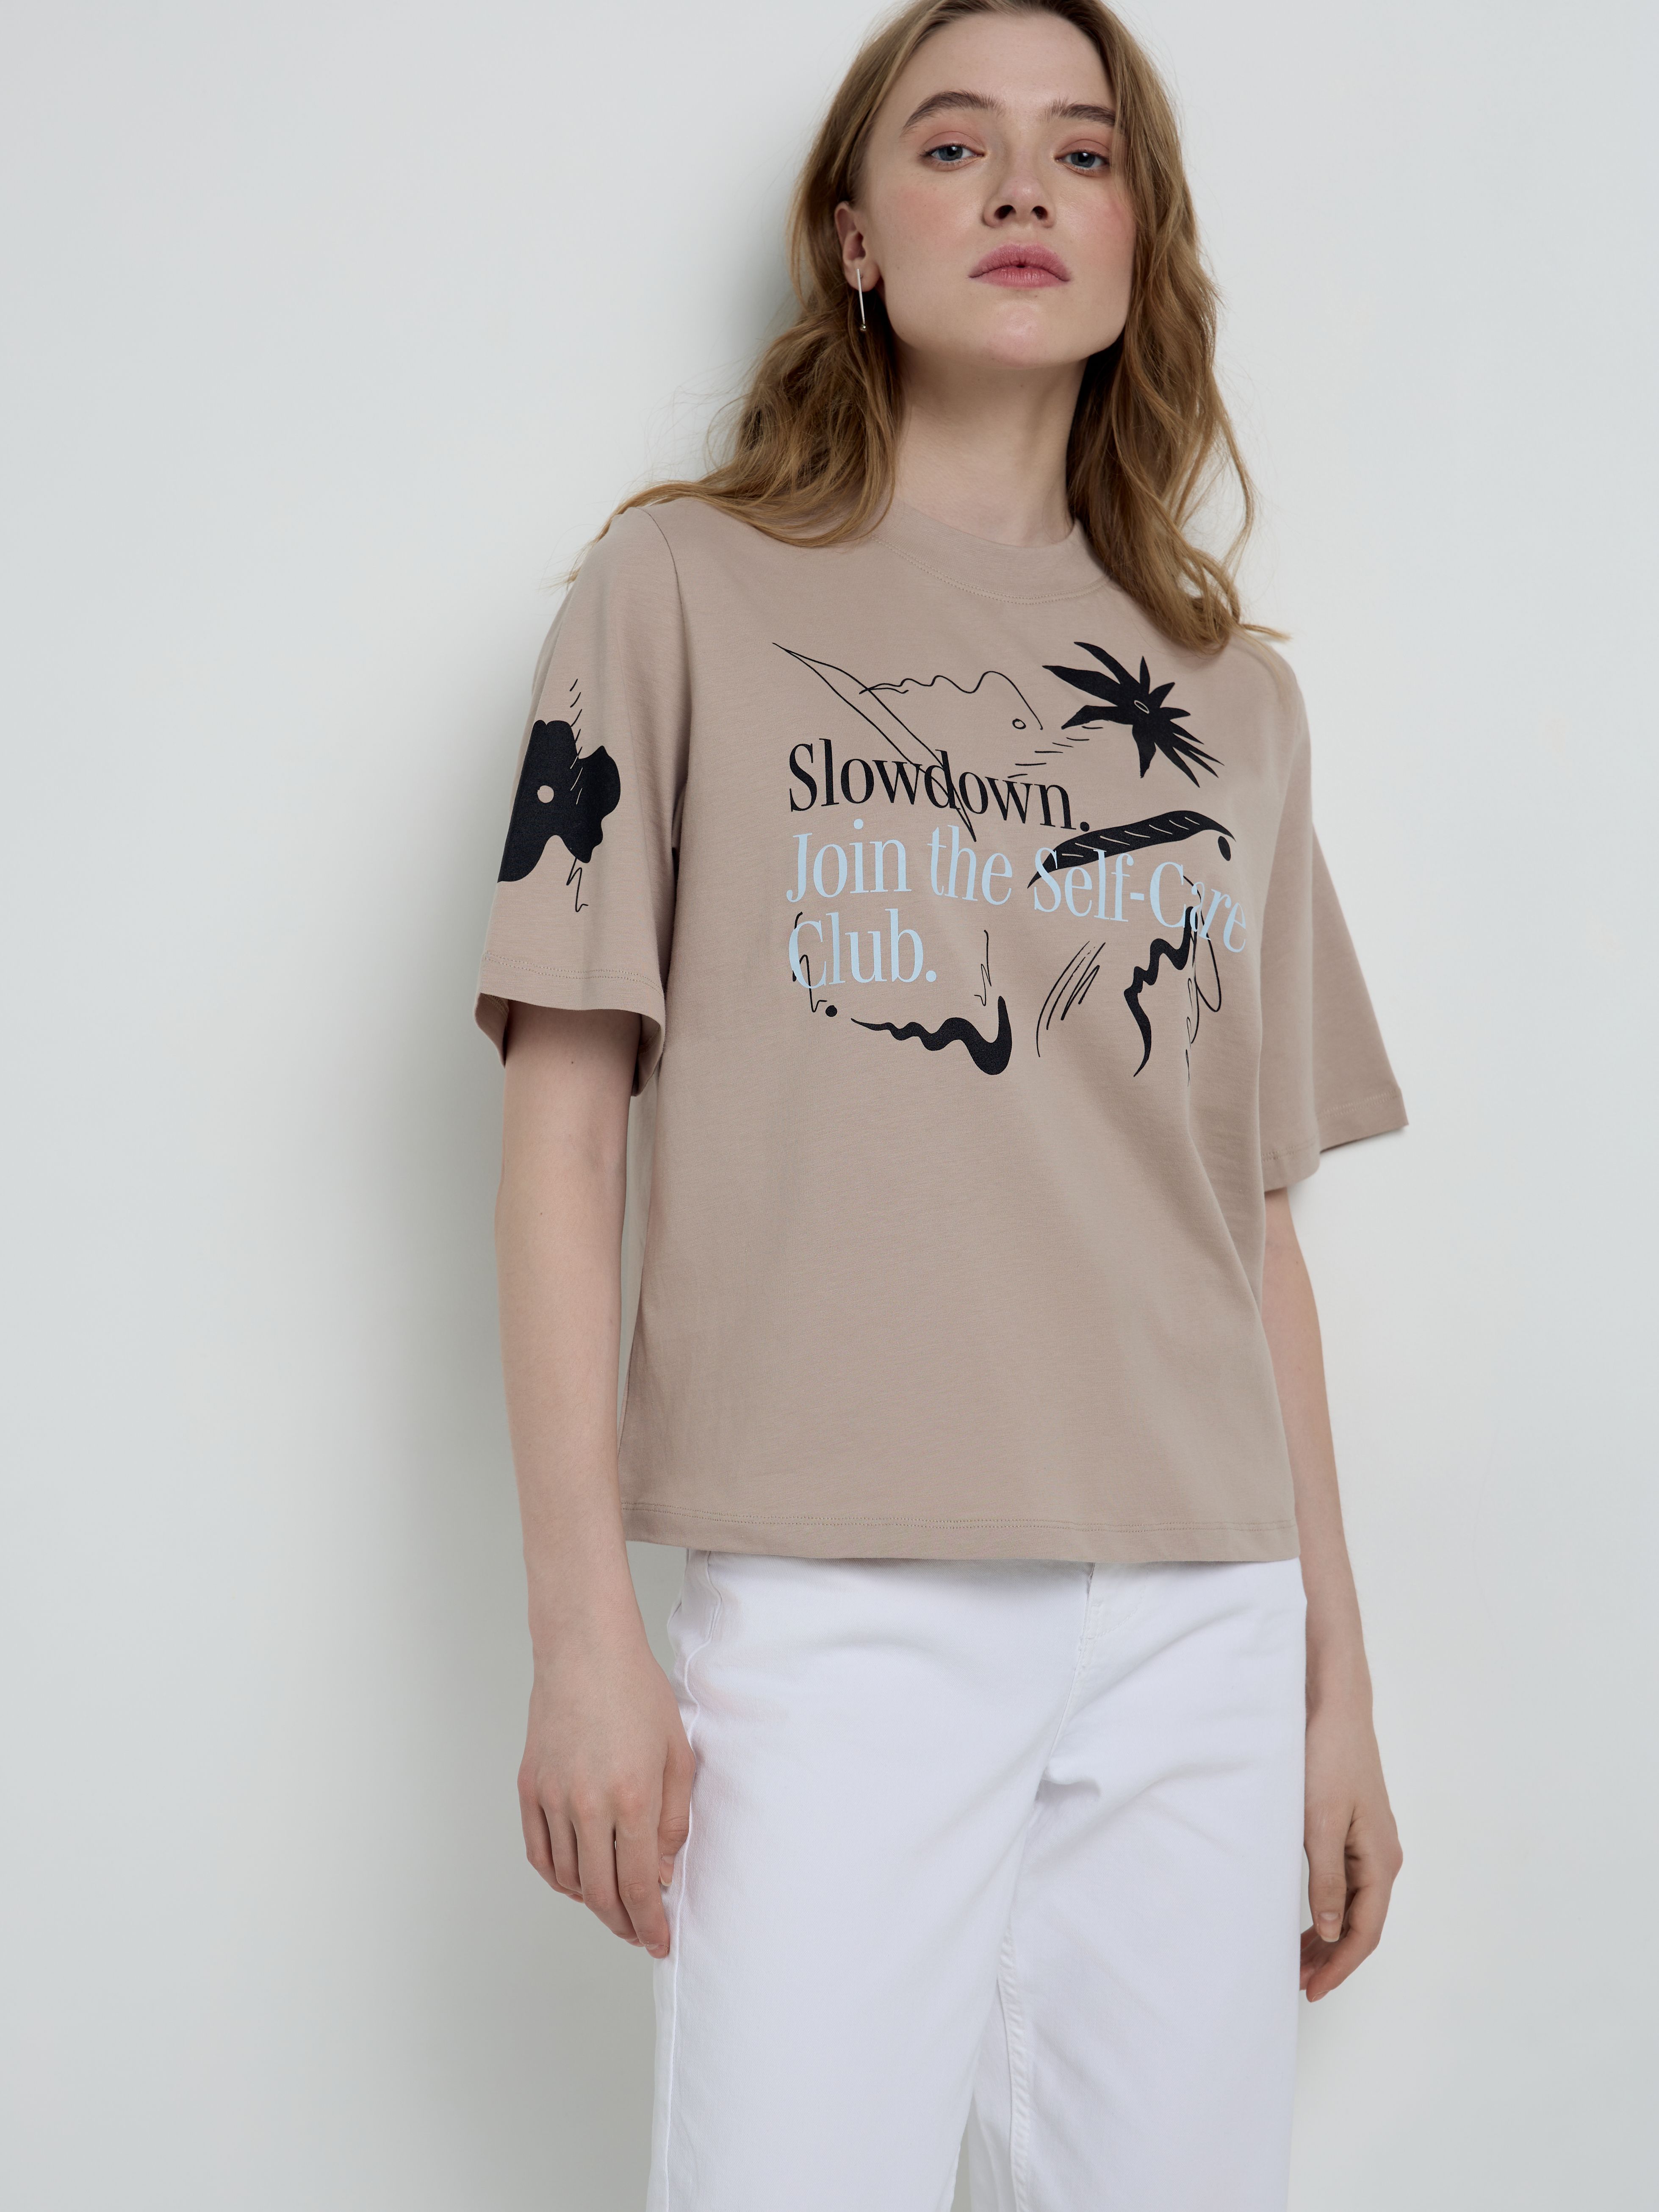 Свободная футболка из хлопка с рисунком «Slowdown» LD 2096 Conte ⭐️, цвет beige, размер 170-100/xl